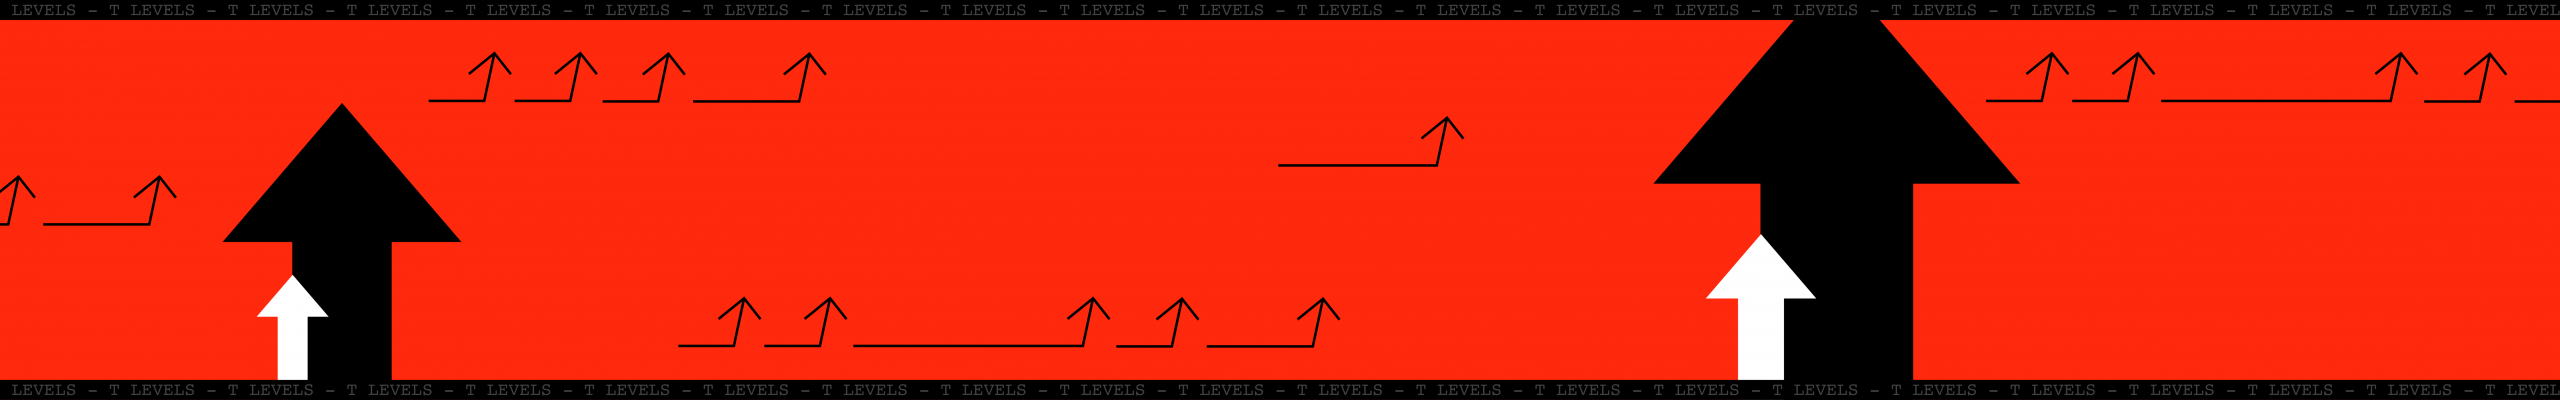 Red T-Level header